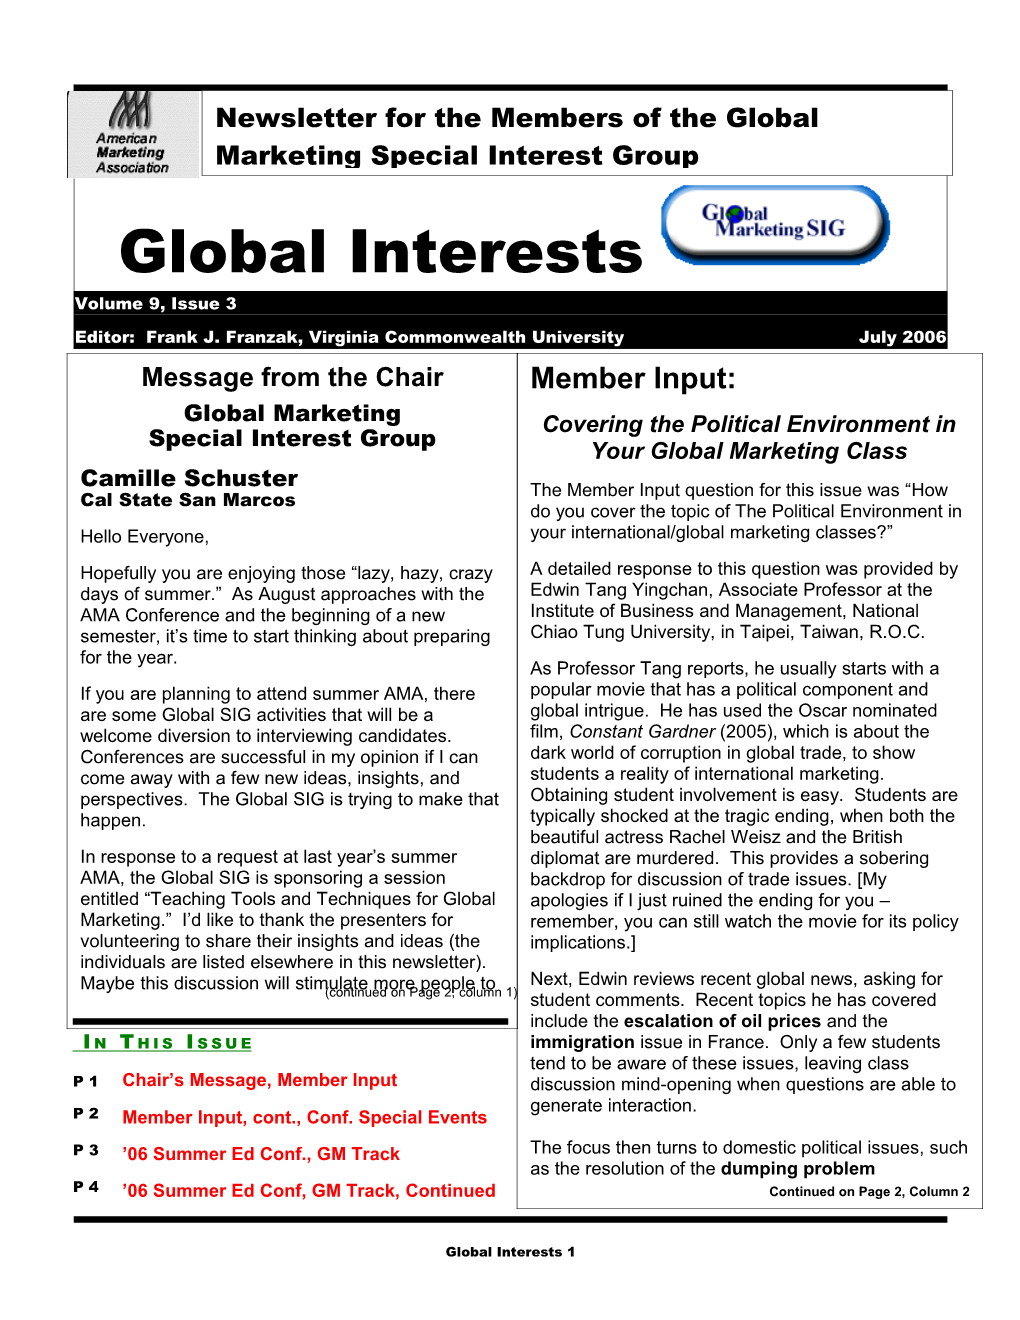 Global Interests